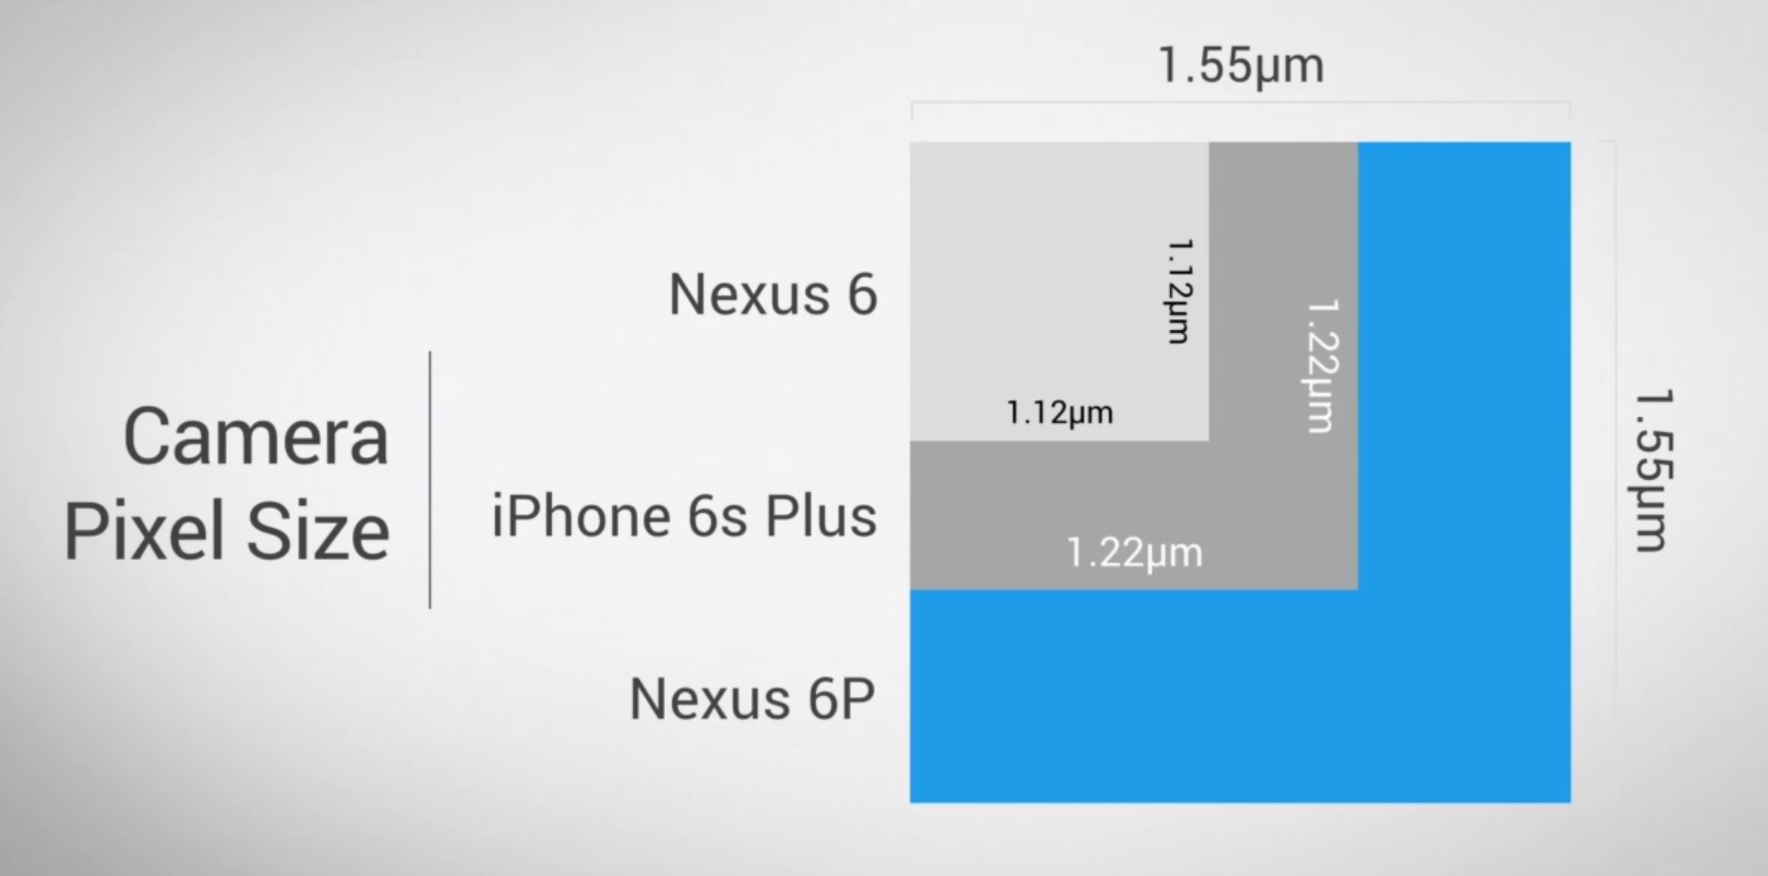 Nexus 6P camera pixel size